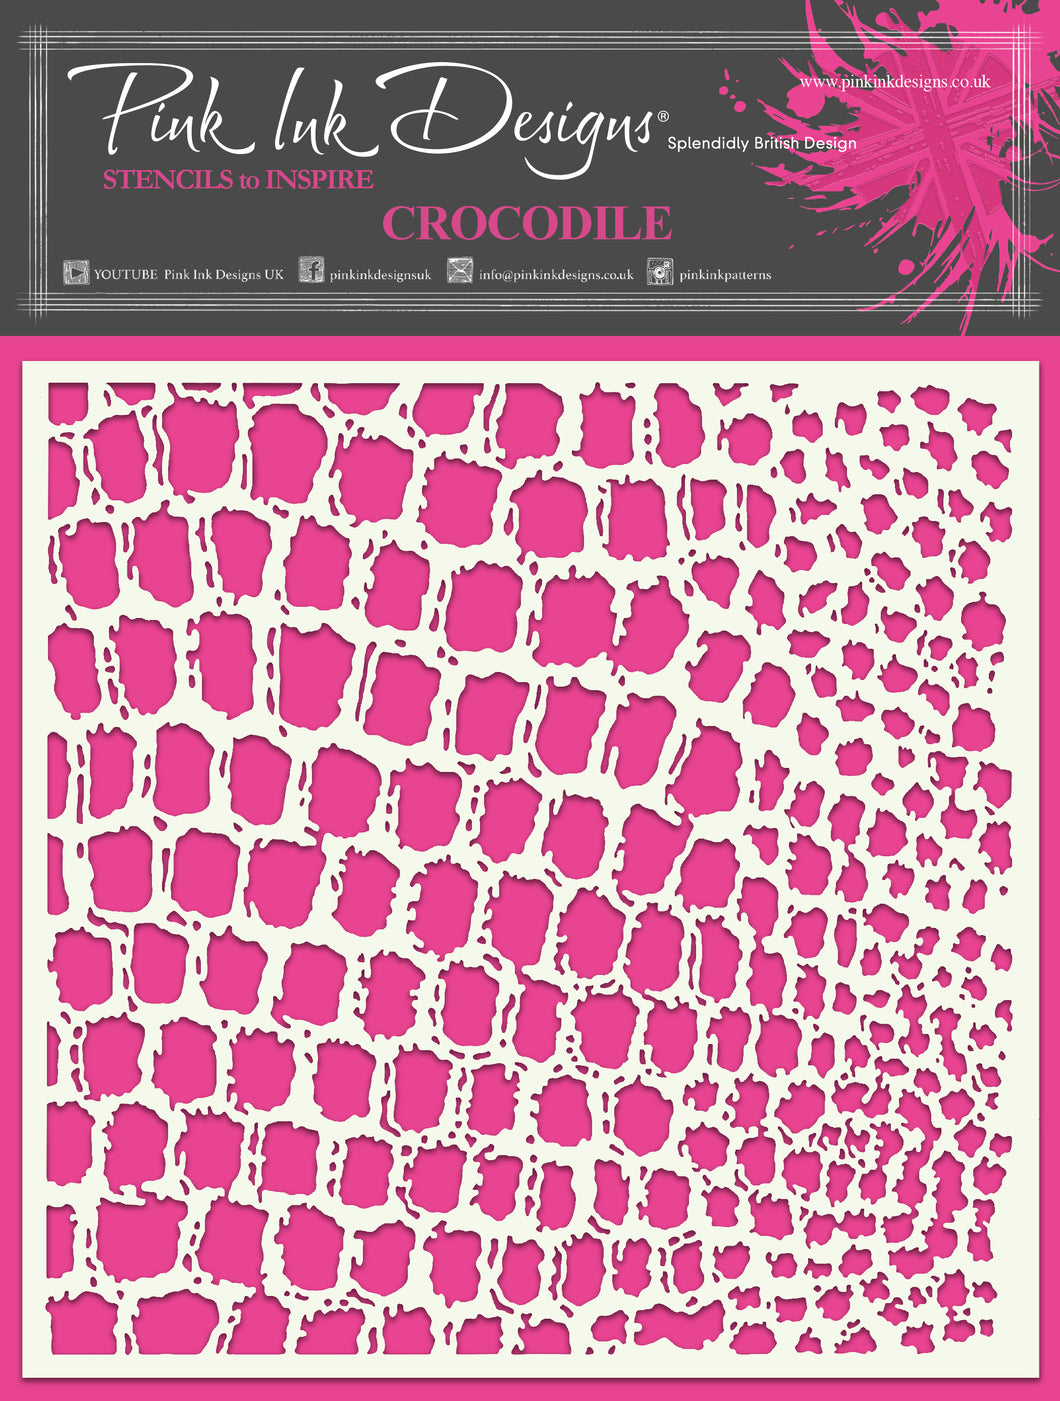 Pink Ink Designs 7 x 7 inch Stencil - Crocodile